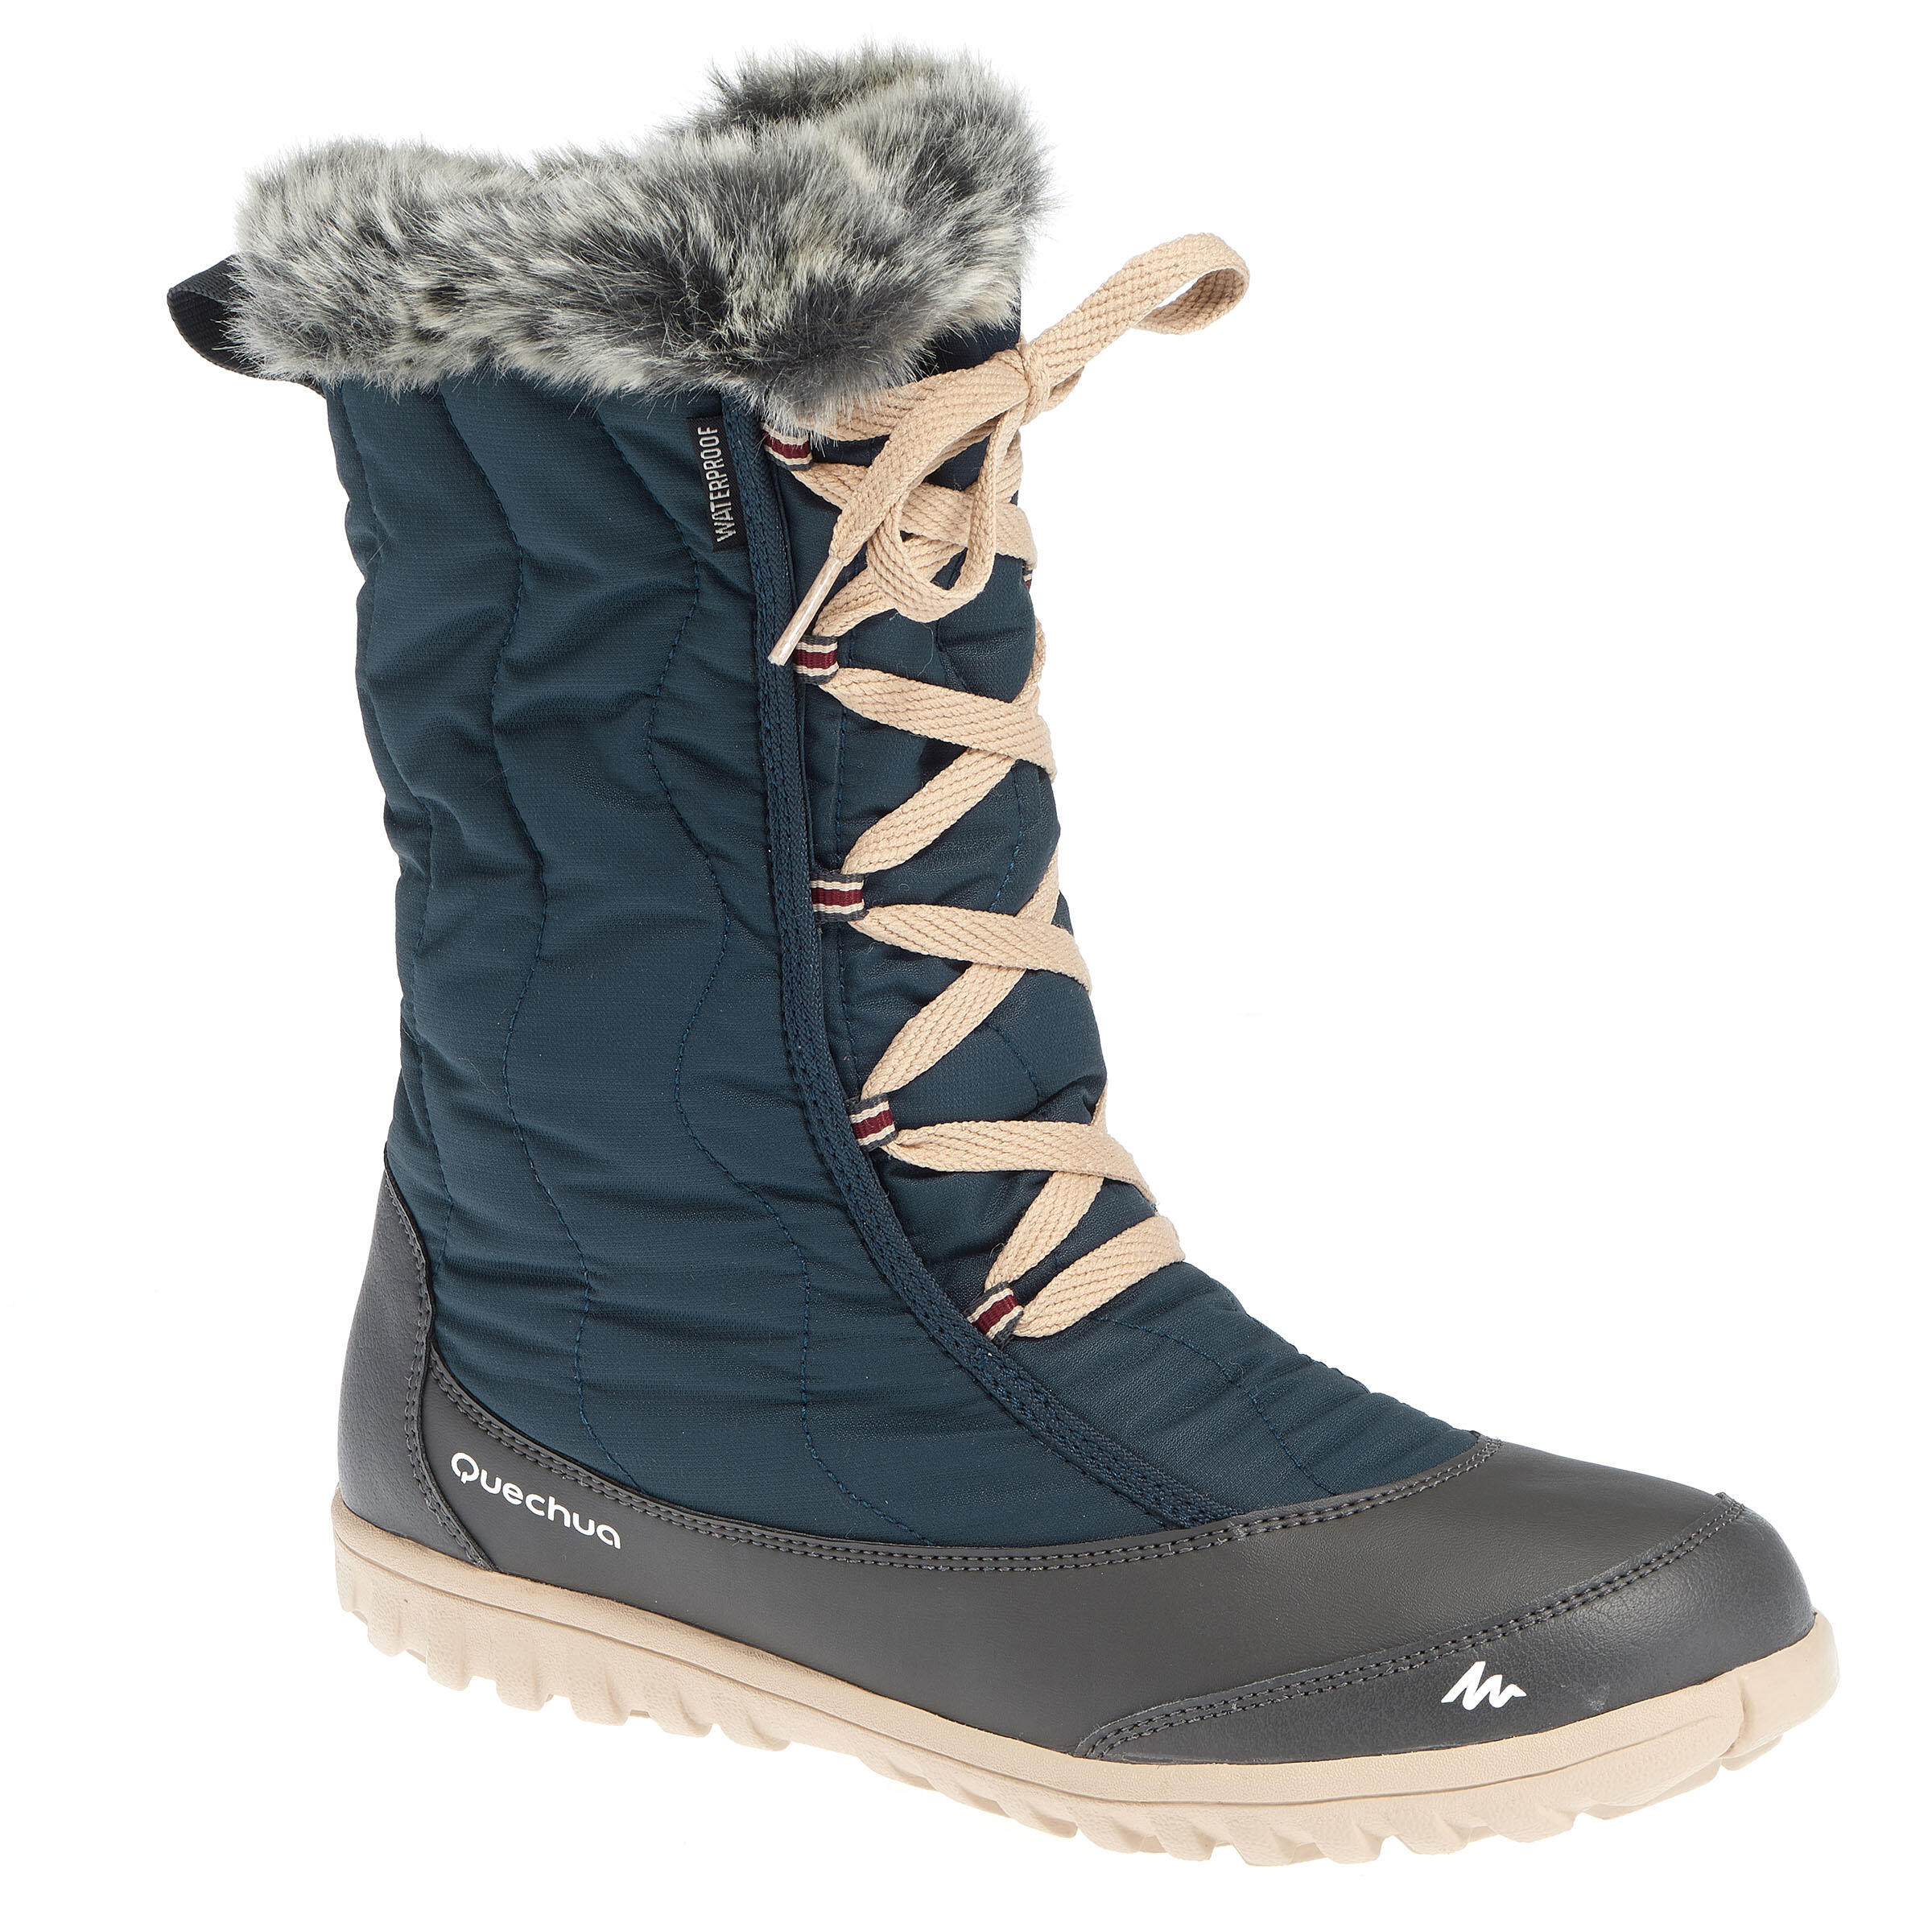 QUECHUA SH500 x-warm blue snow boots with laces